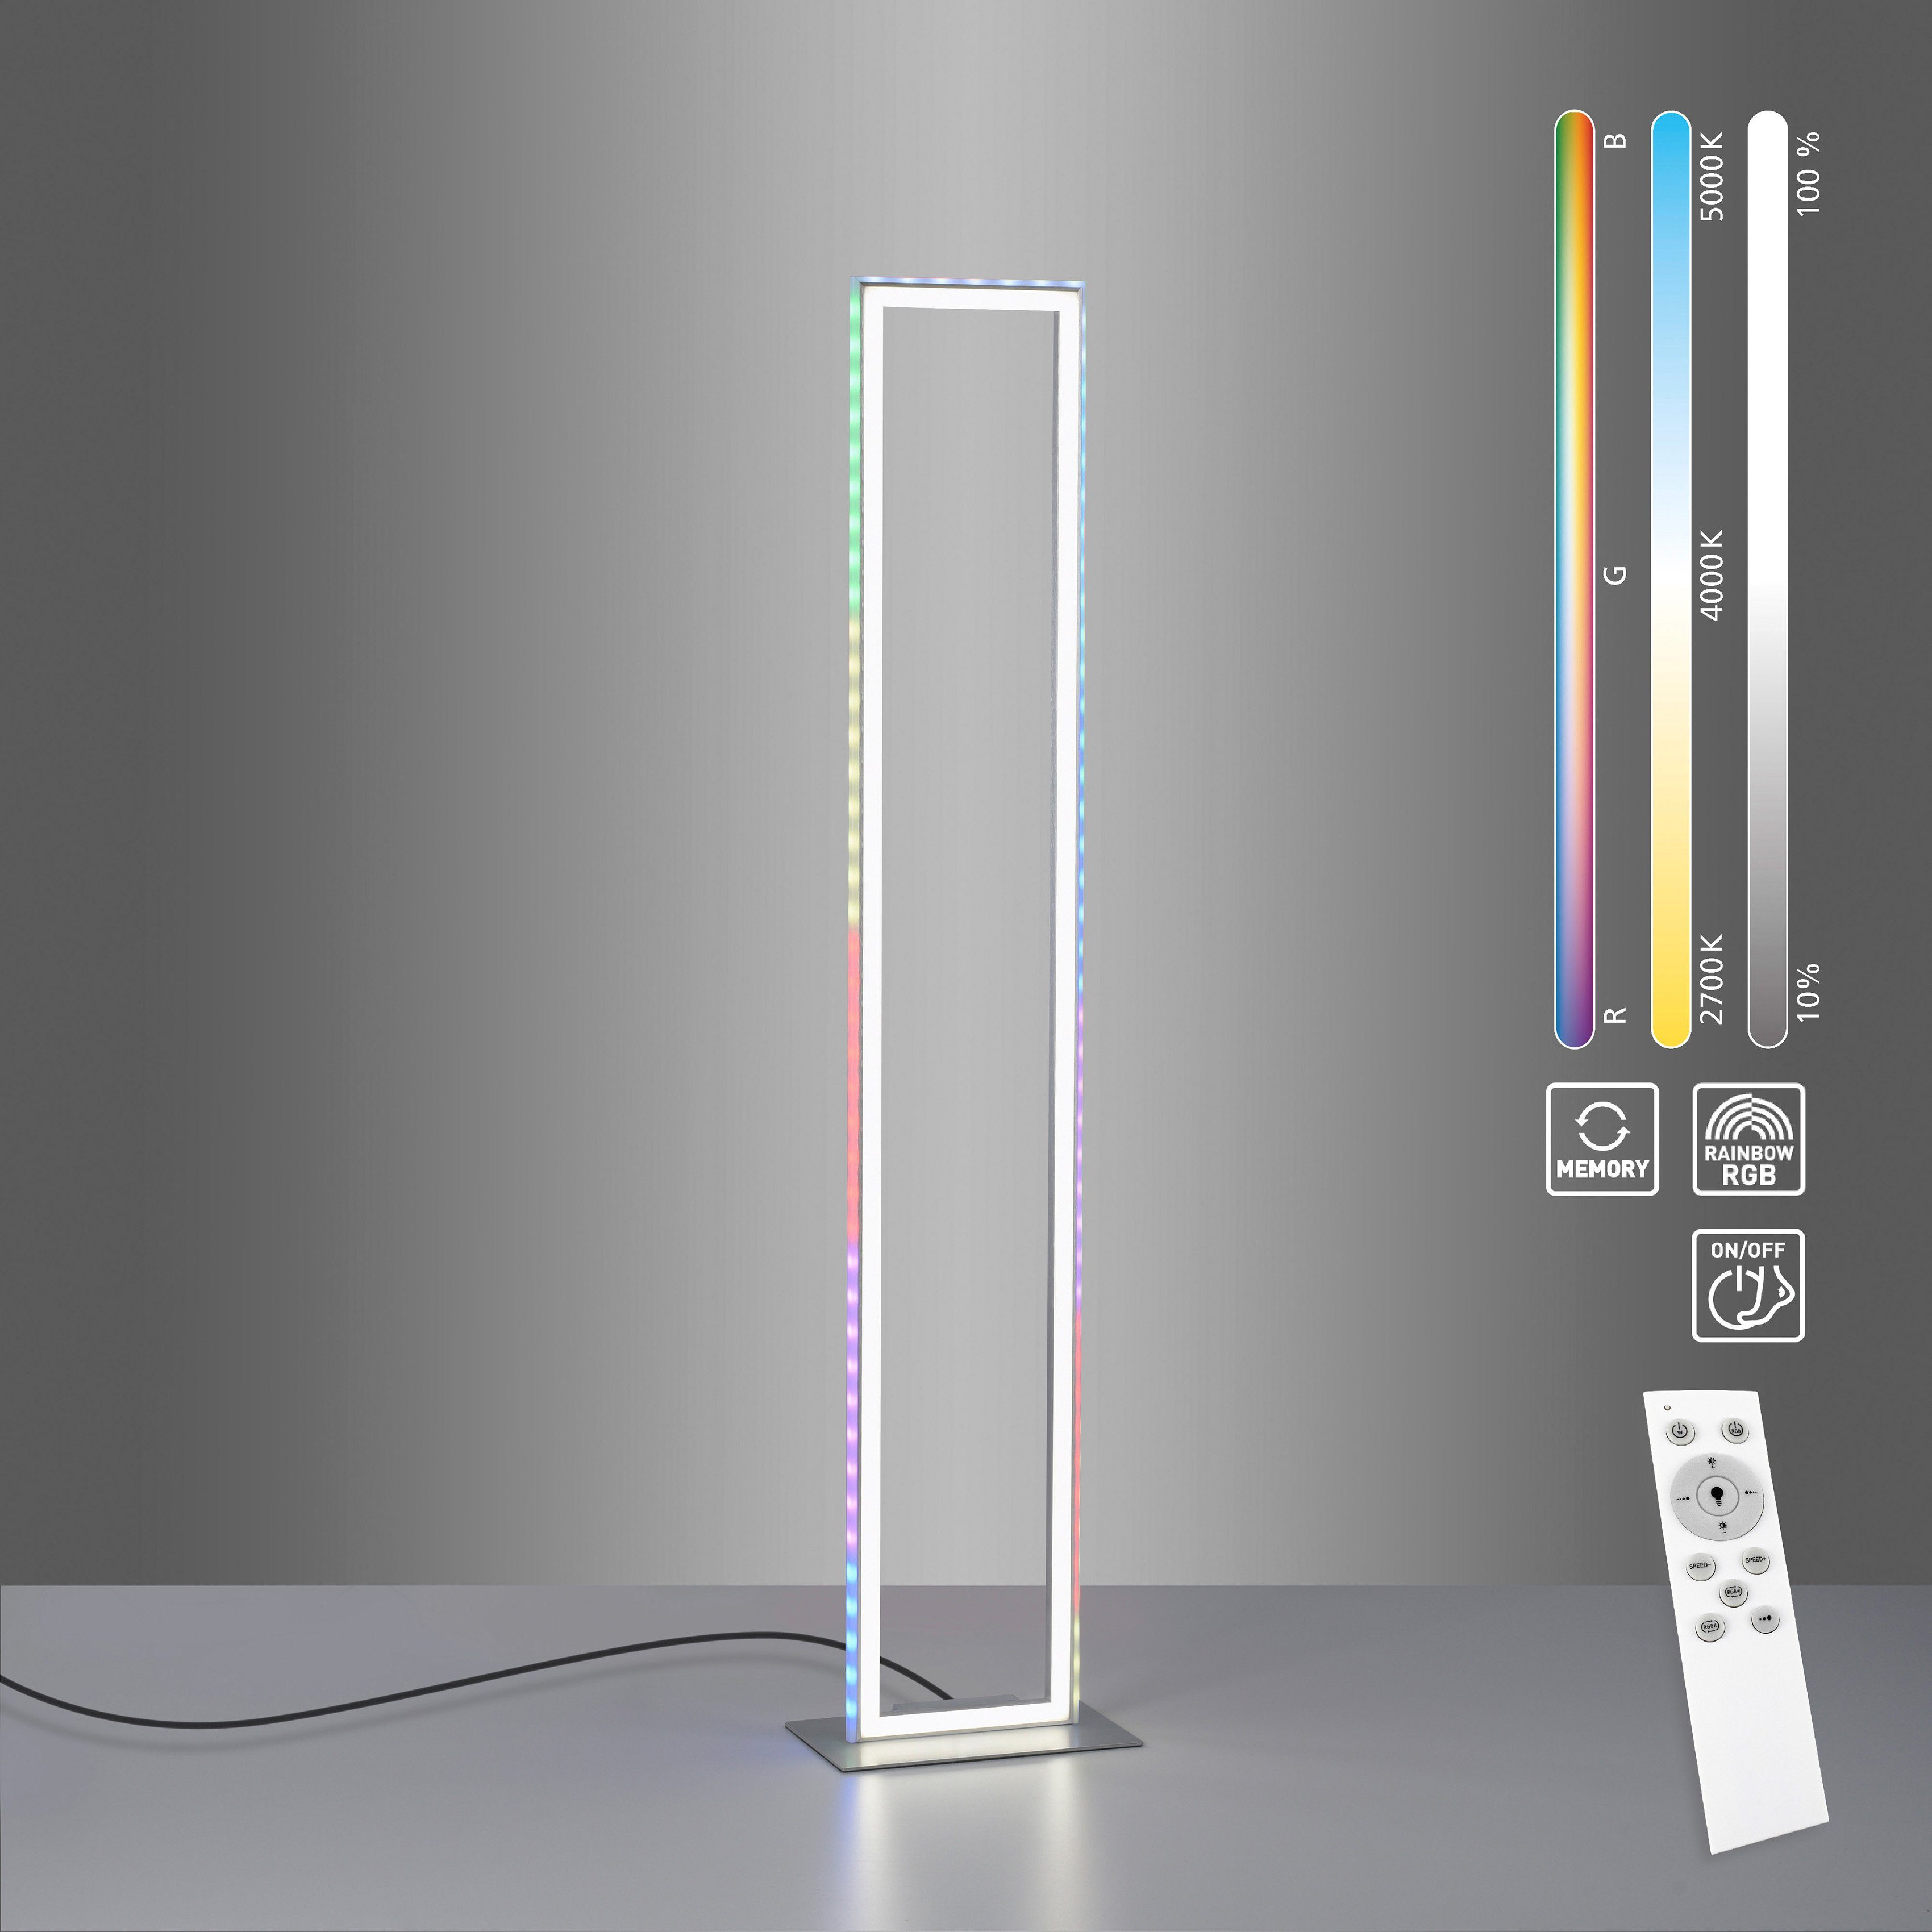 warmweiß LED 2700-5000K, - Luan, kaltweiß, my dimmbar Infrarot-Fernbed. über home integriert, Stehlampe fest Sidelight: Downlight: LED Rainbow-RGB, Fernbedienung,